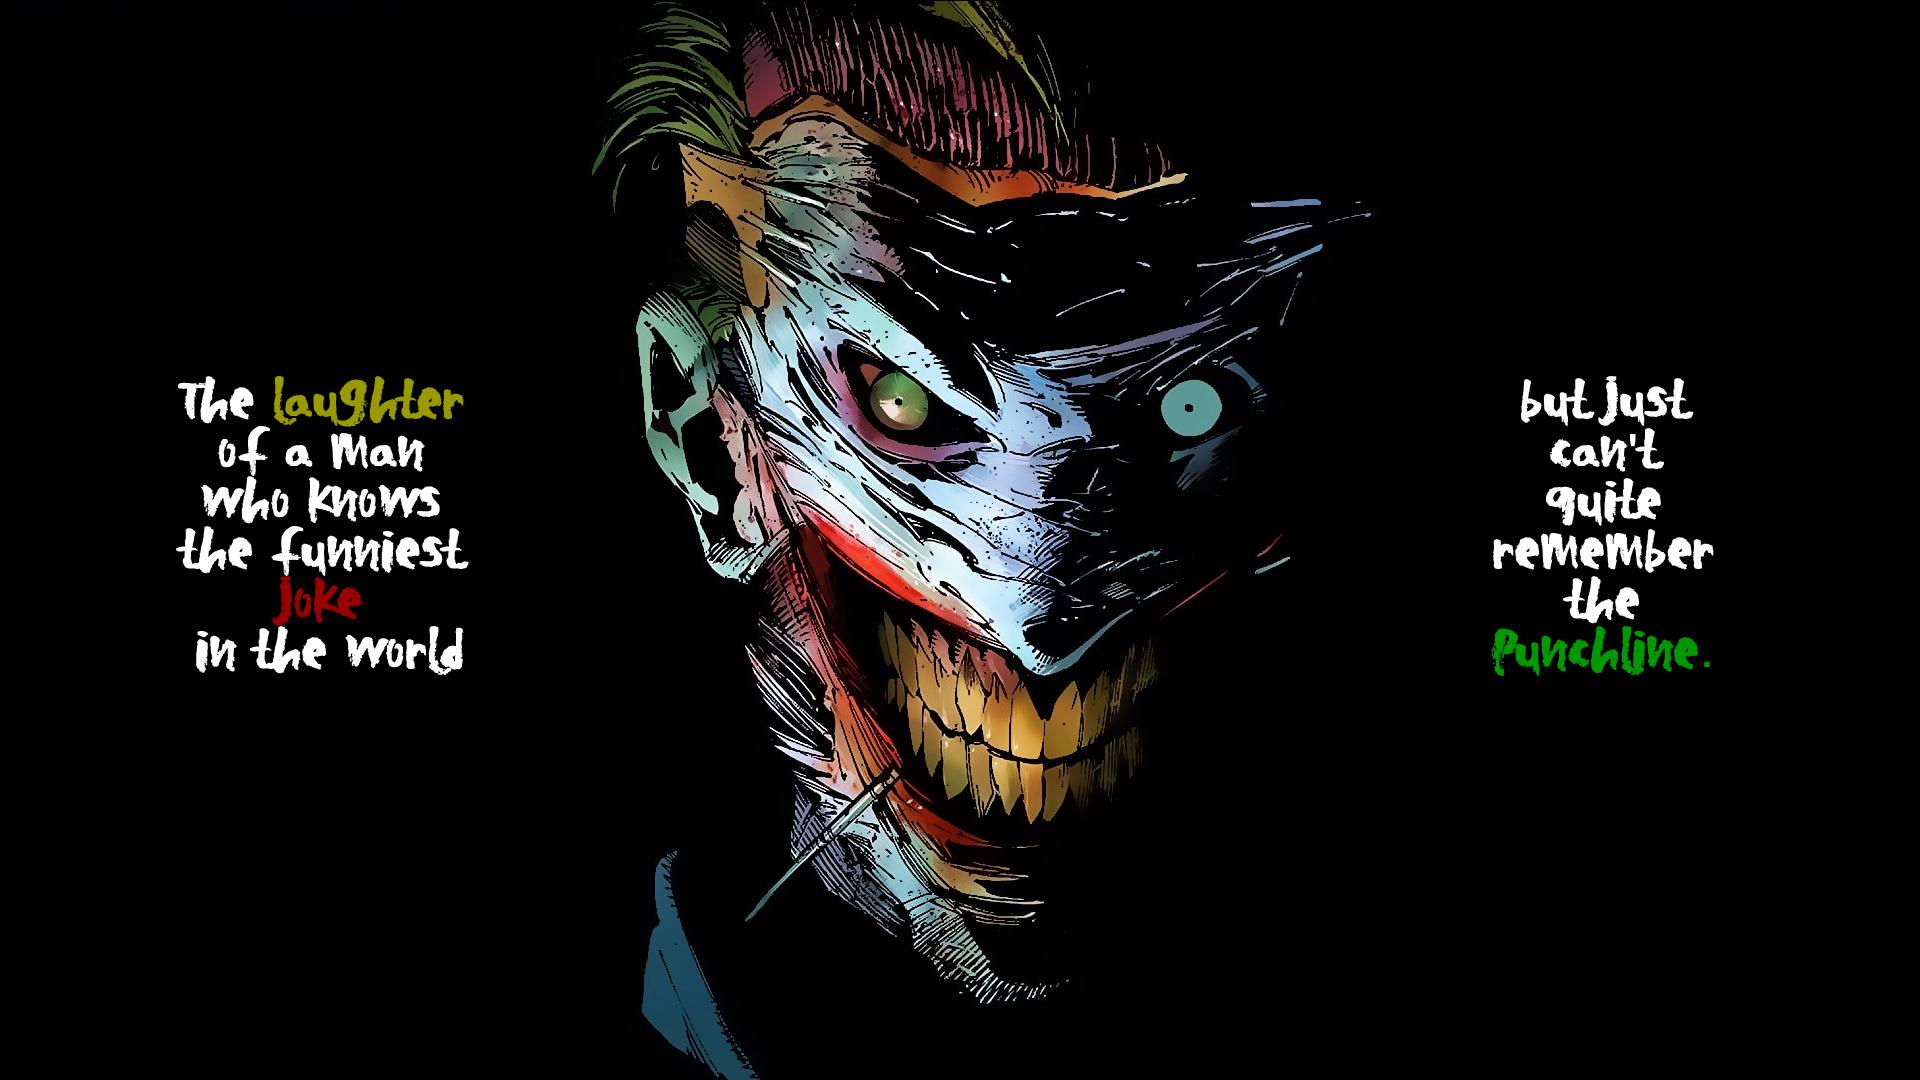 Download wallpaper for 720x1280 resolution | quote, Joker | other |  Wallpaper Better